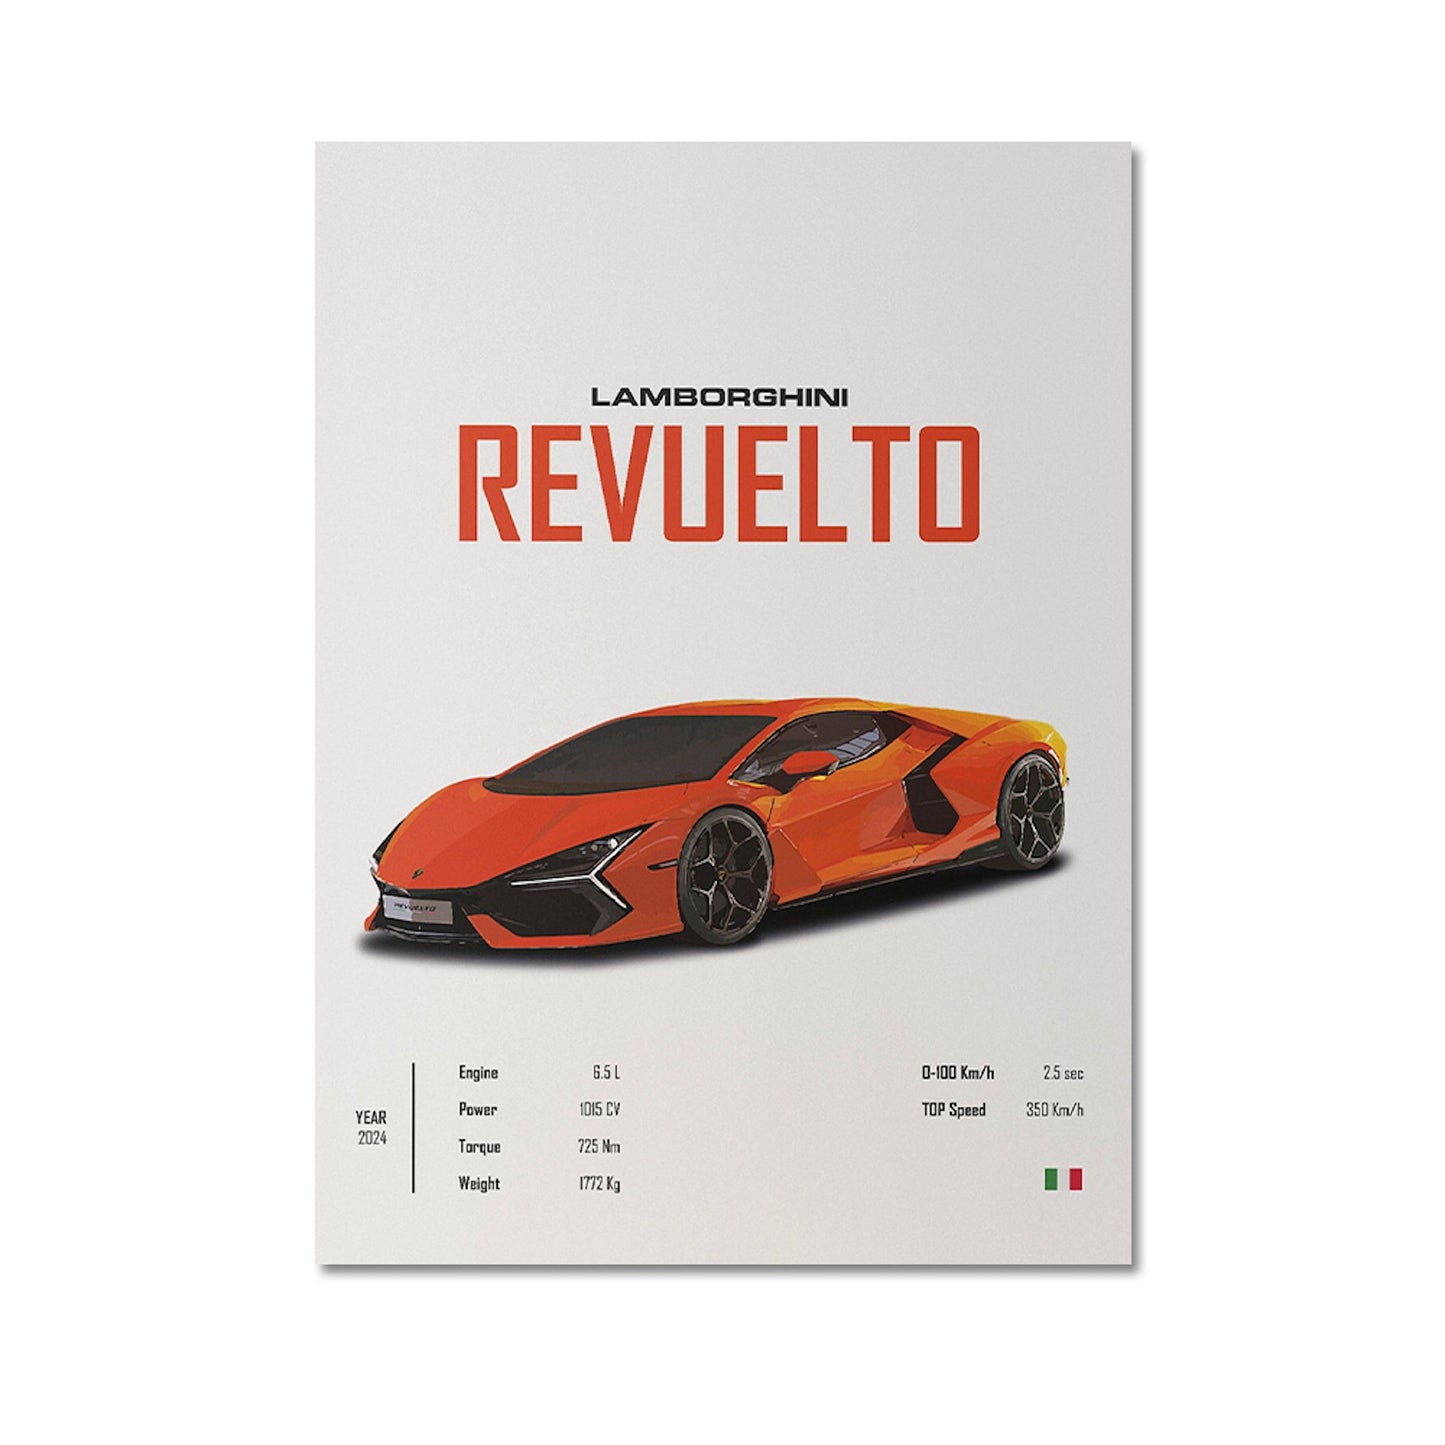 Poster Sportwagen Mclaren Lamborghini Porsche Klassiker Legenden  I Geschenk für ihn I Wohnzimmmer & Büro I Wand Deko I Print ohne Rahmen